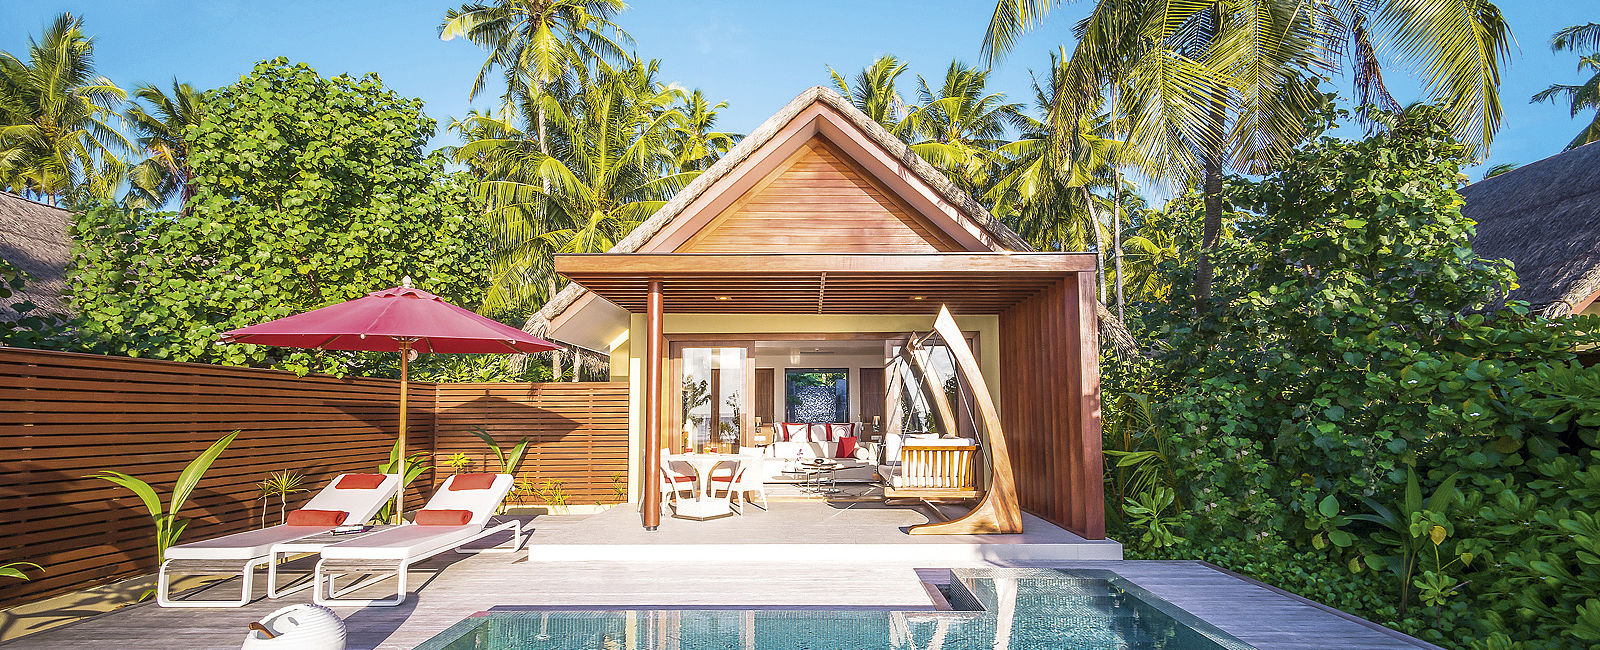 VERY SPECIAL HOTEL
 Niyama Private Islands Maldives 
 Doppeltes Inselglück 